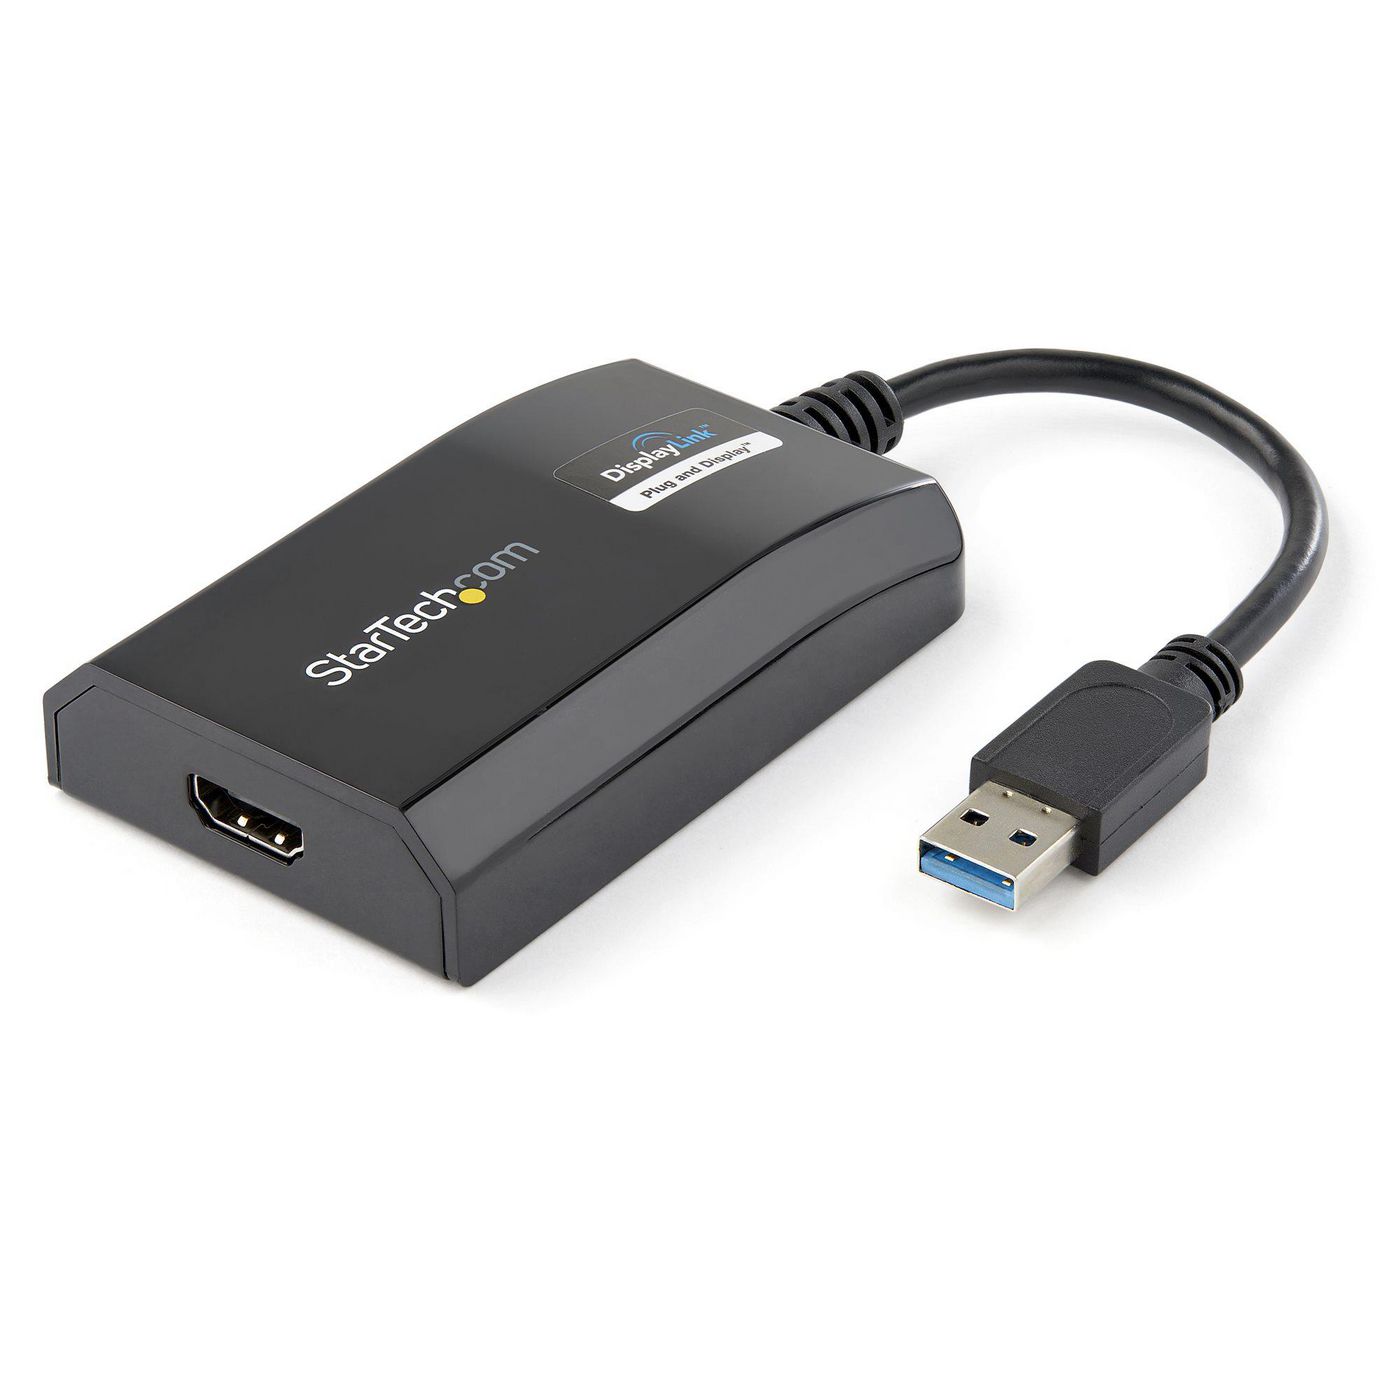 StarTechcom USB32HDPRO USB 3.0 TO HDMI VIDEO ADAPTER 